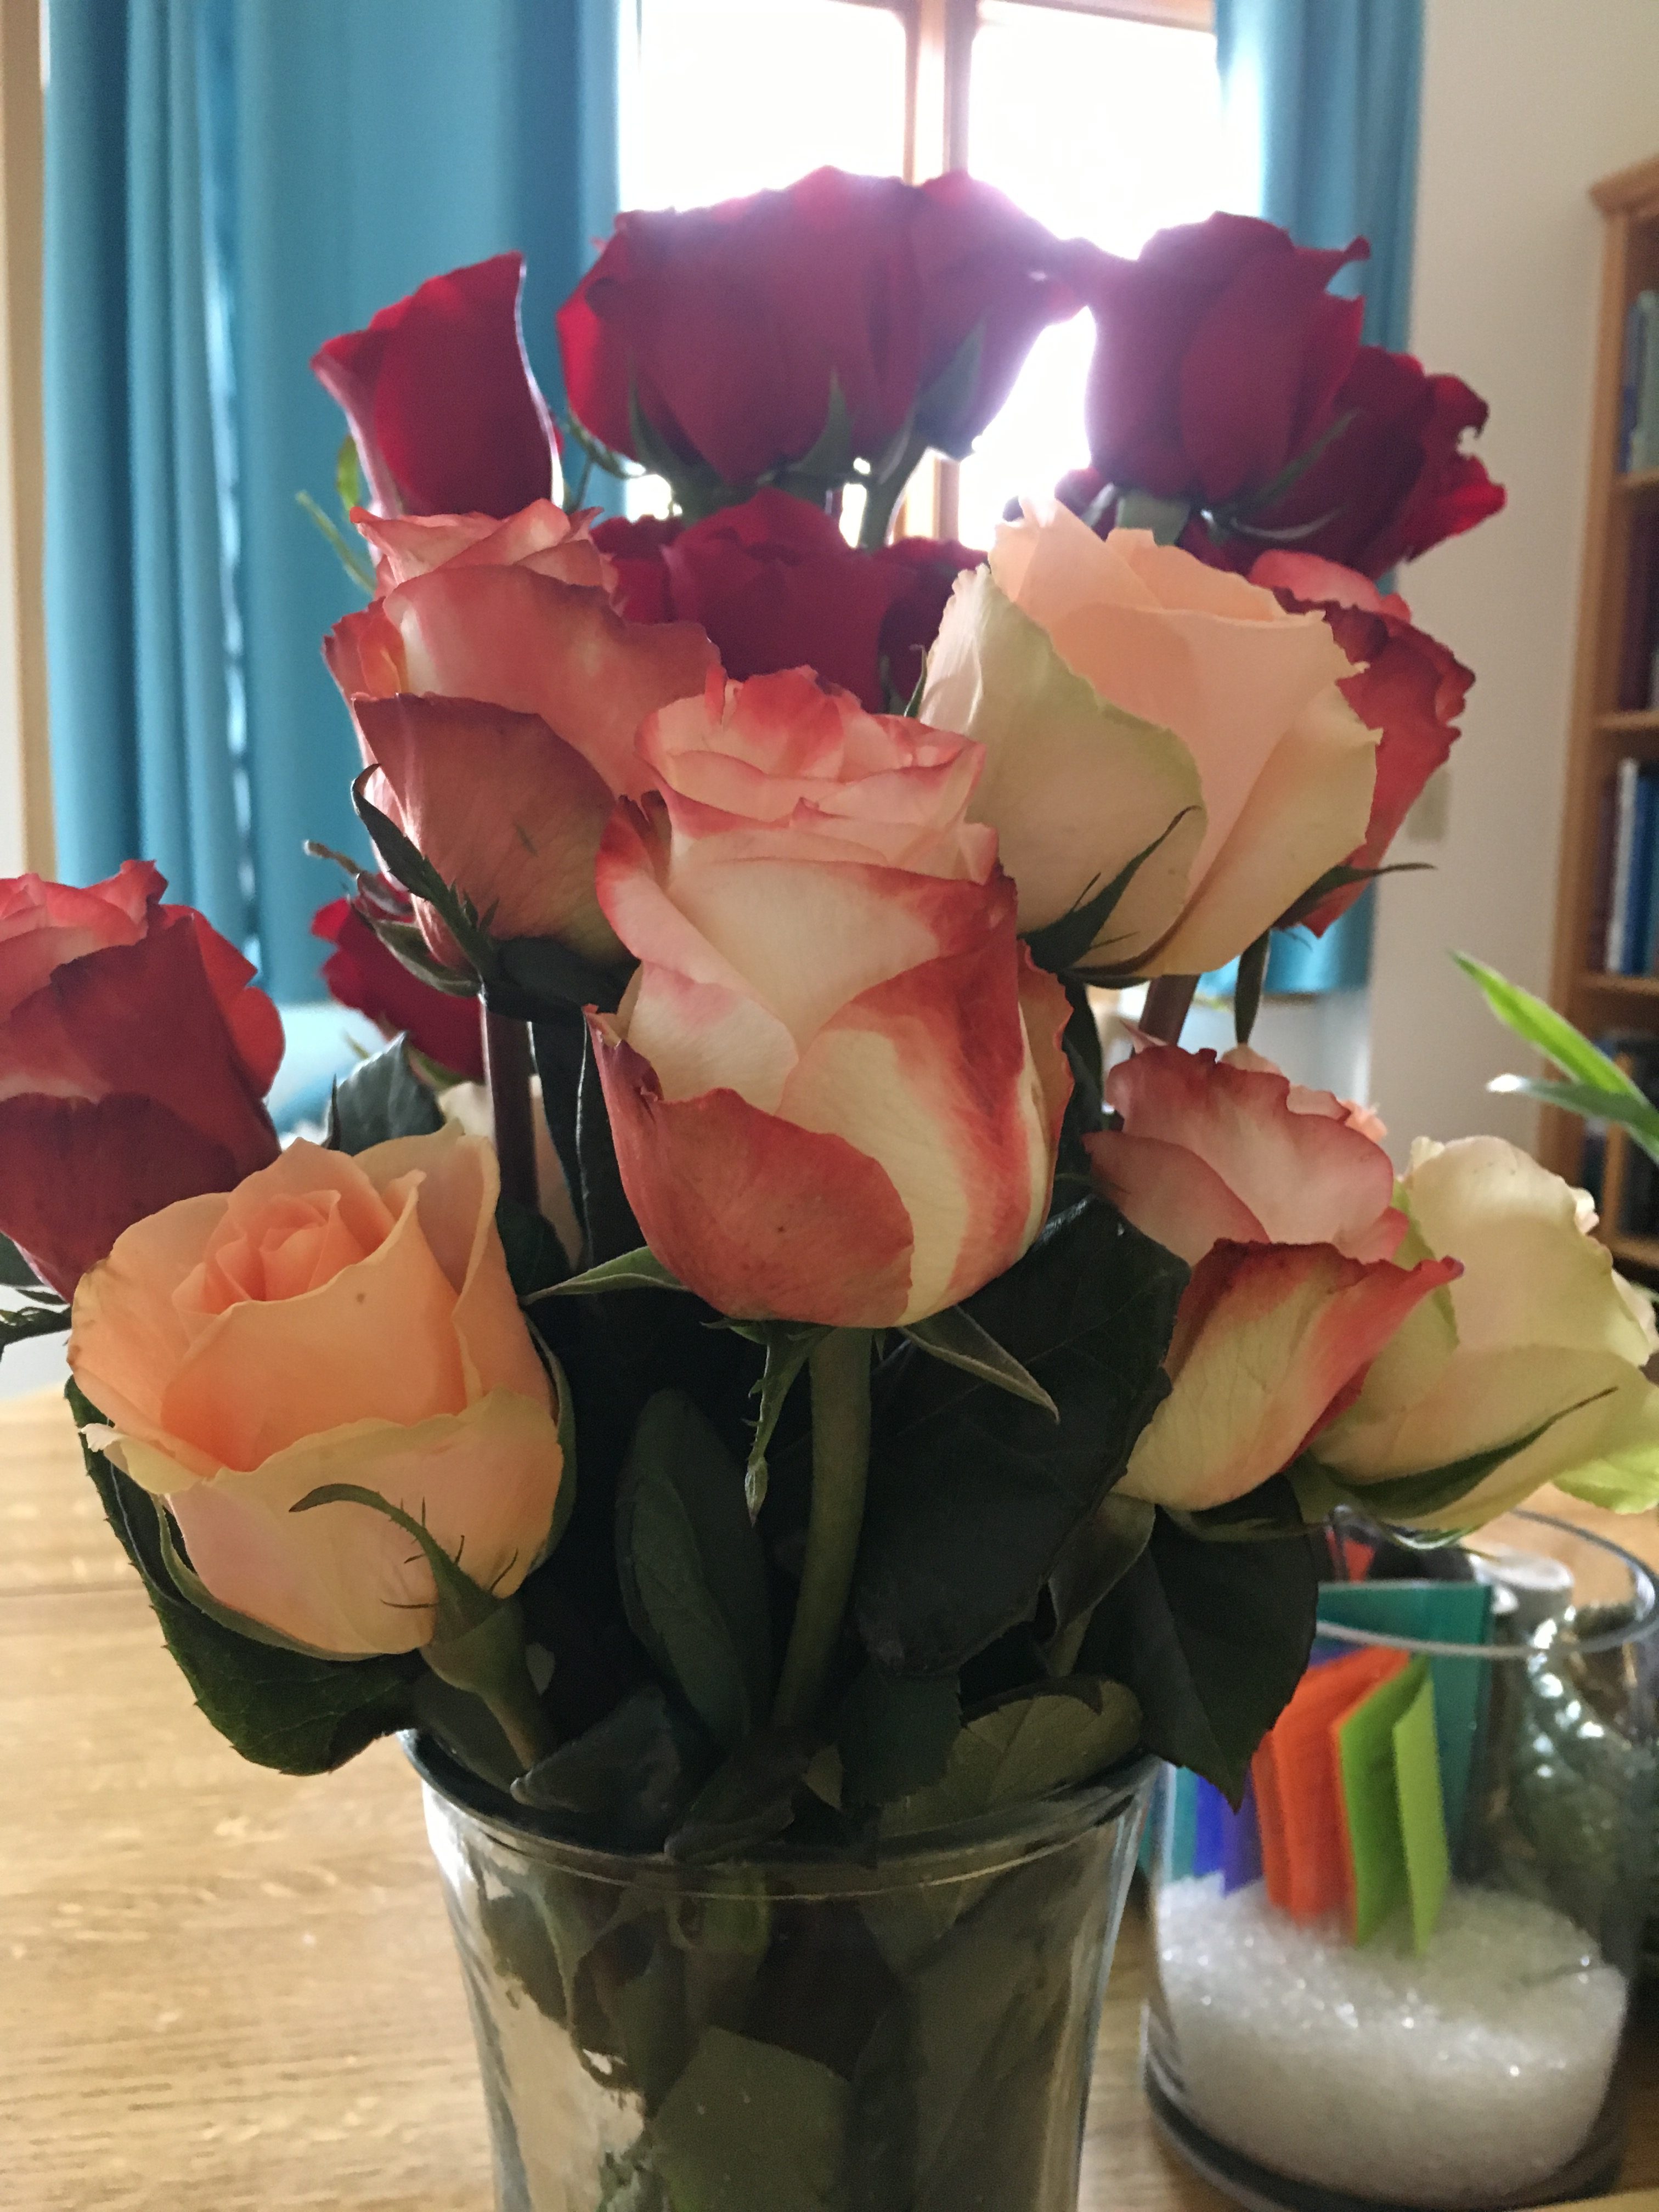 Roses on a desk